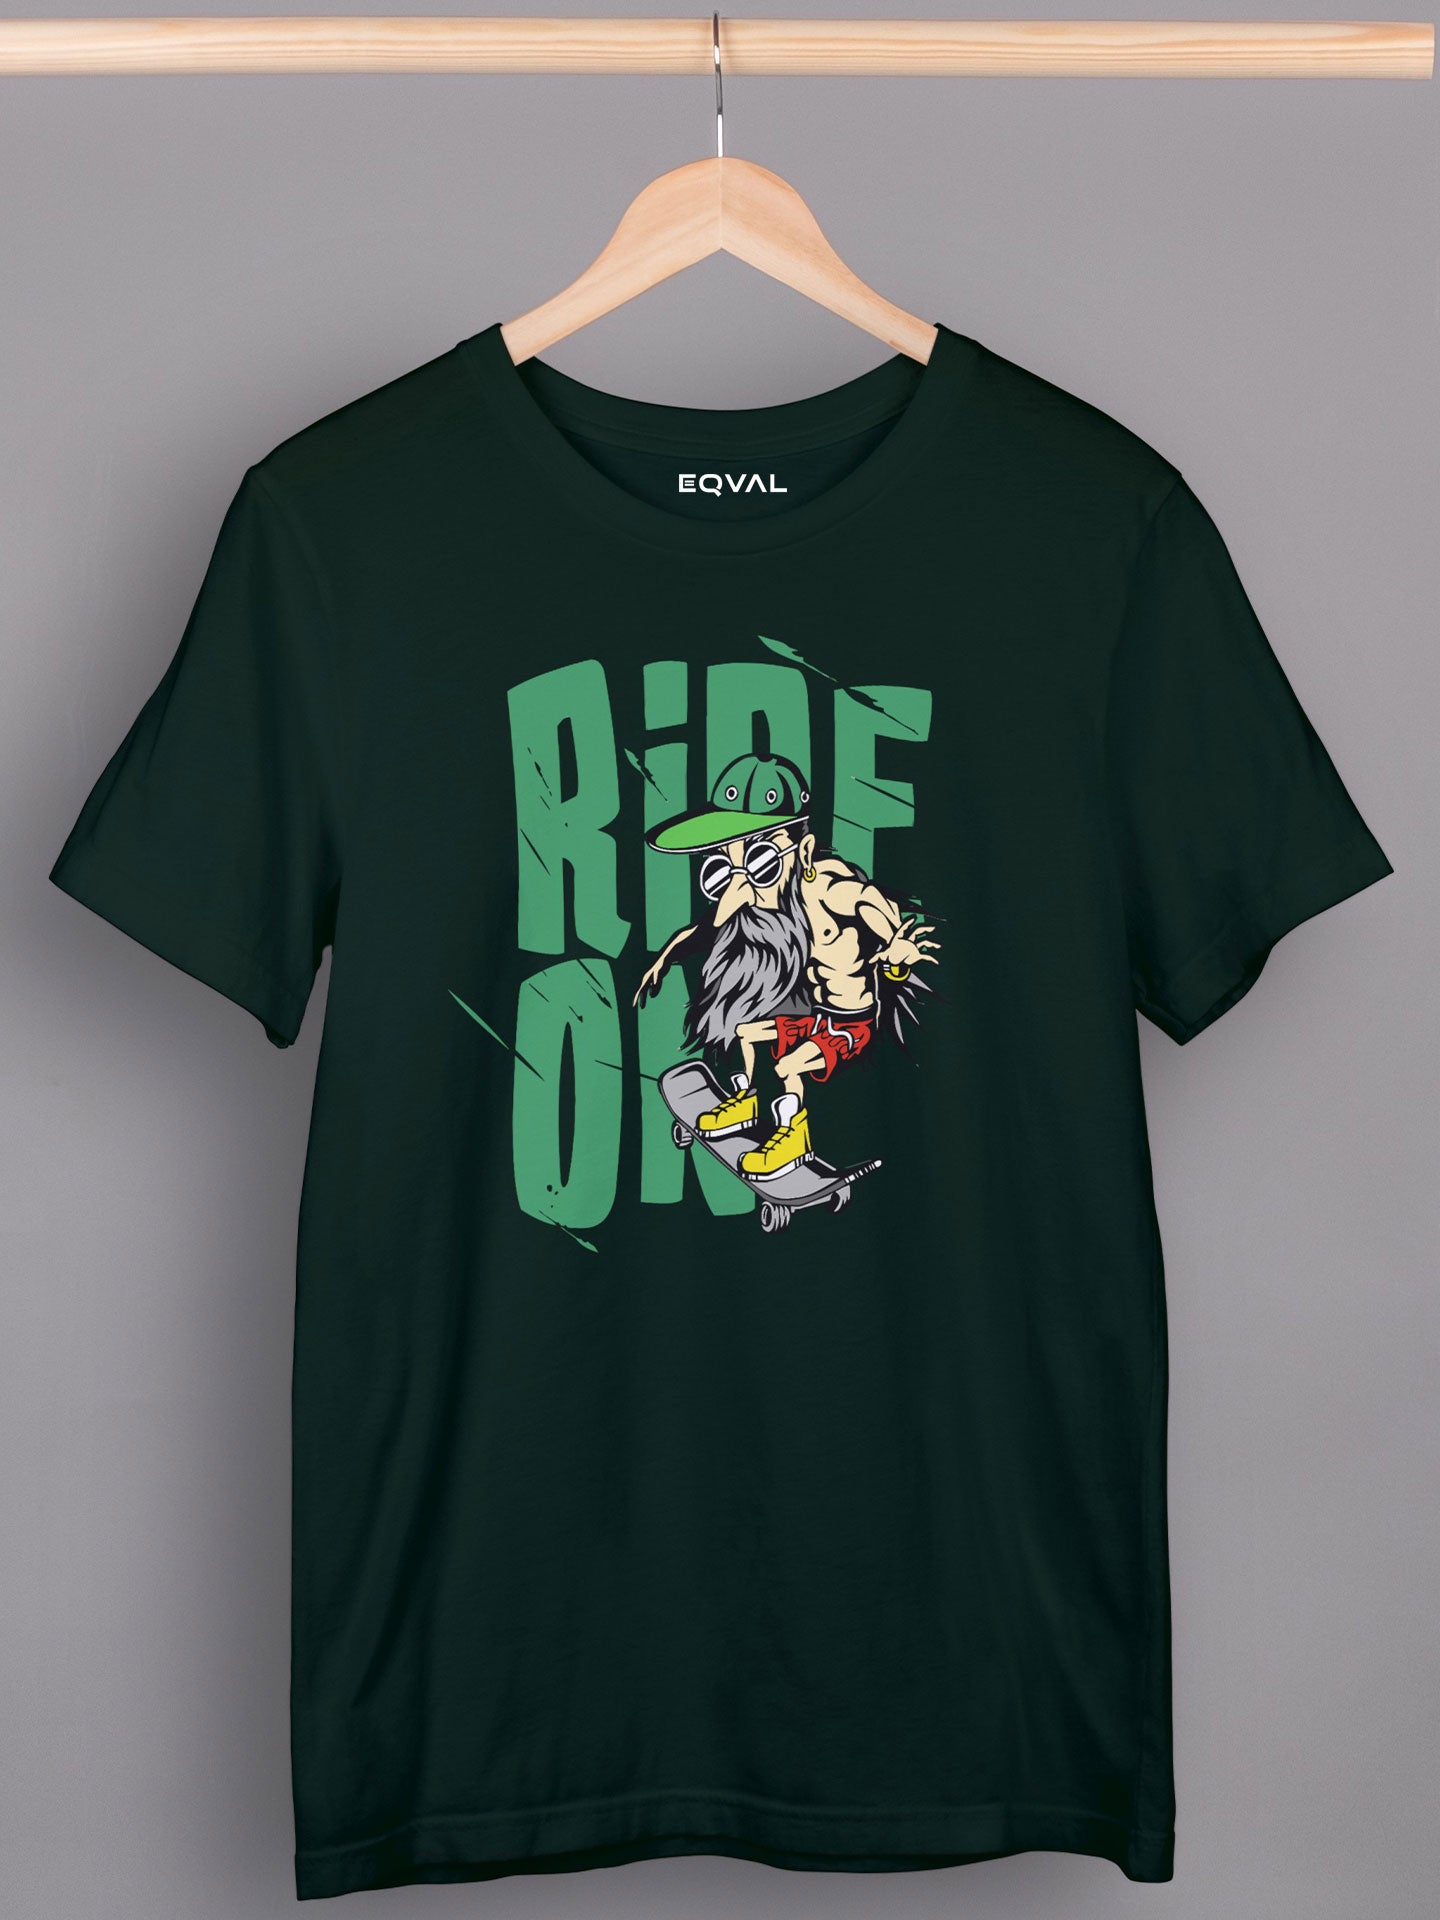 Men's Green Ride On Printed T-shirt